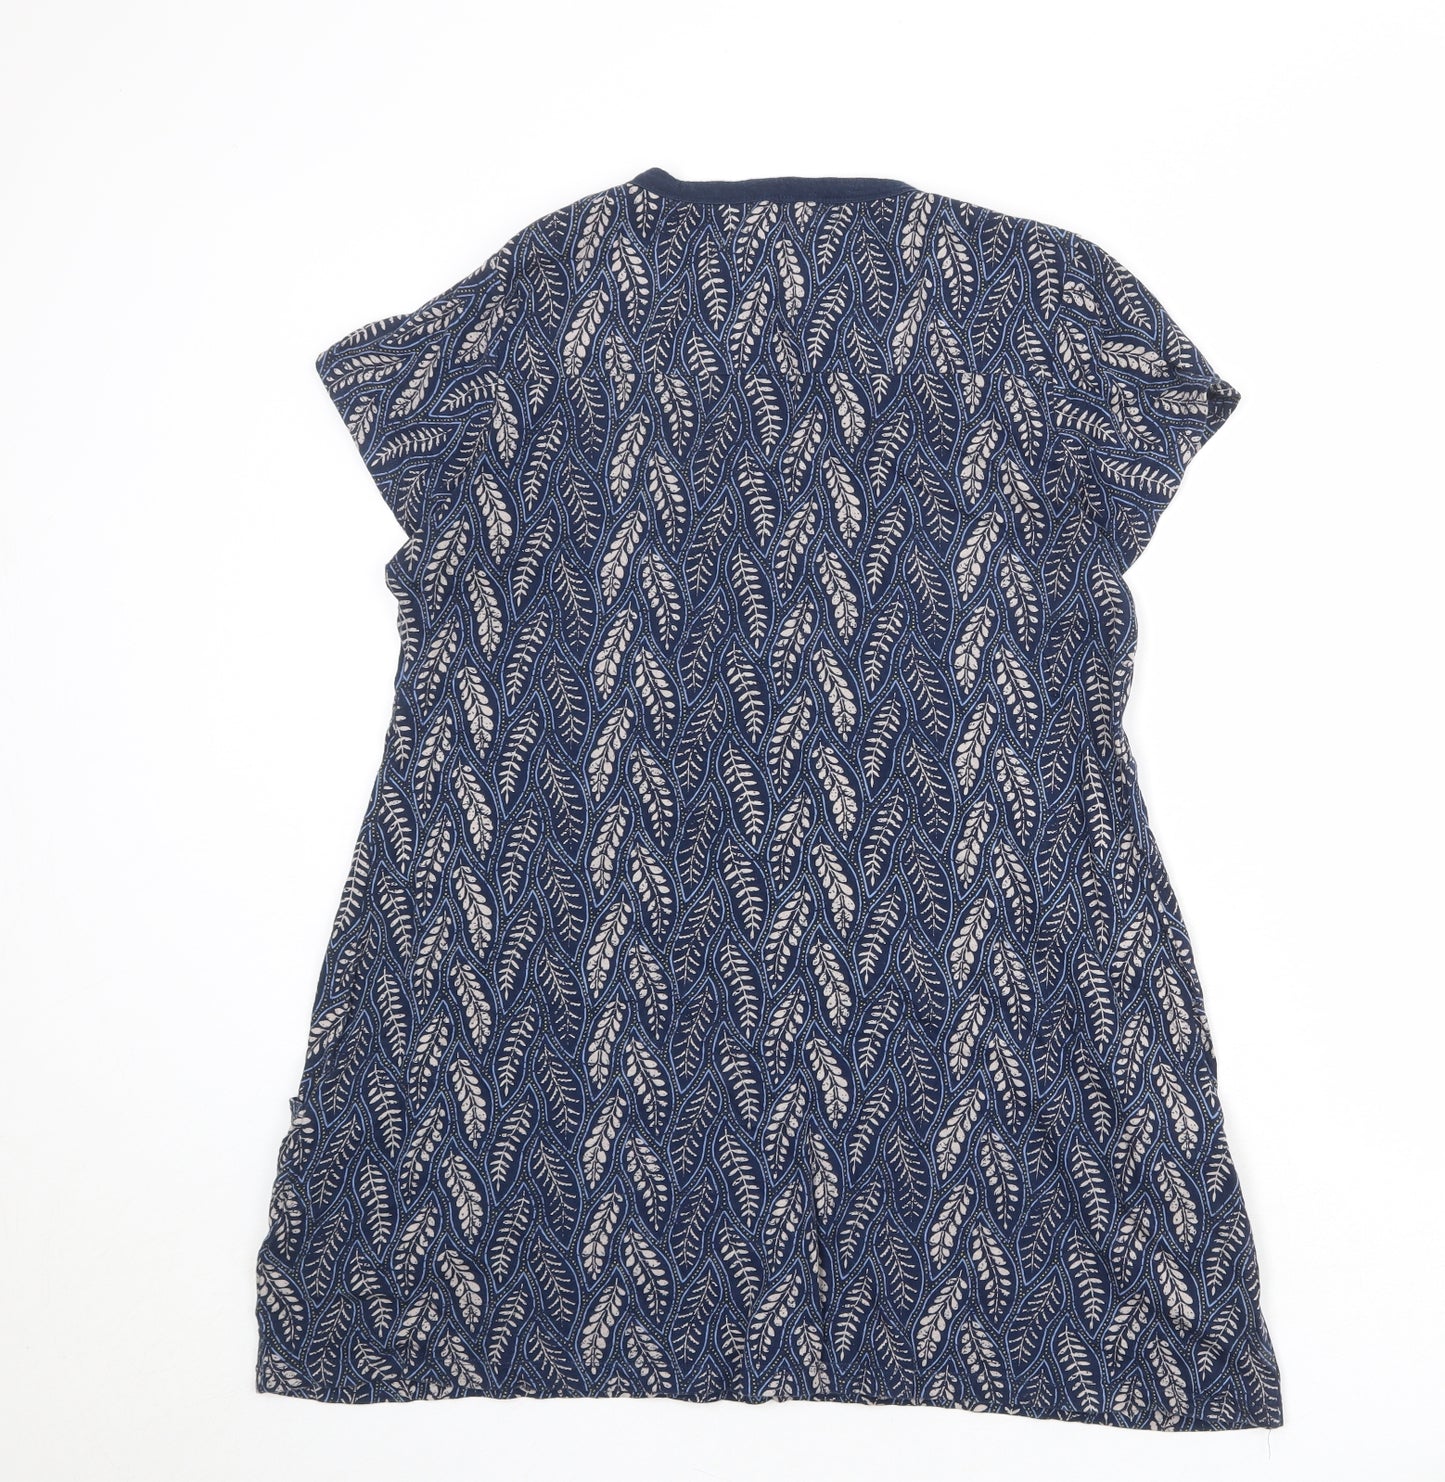 MANTARAY PRODUCTS Womens Blue Geometric 100% Cotton Basic Blouse Size 16 V-Neck